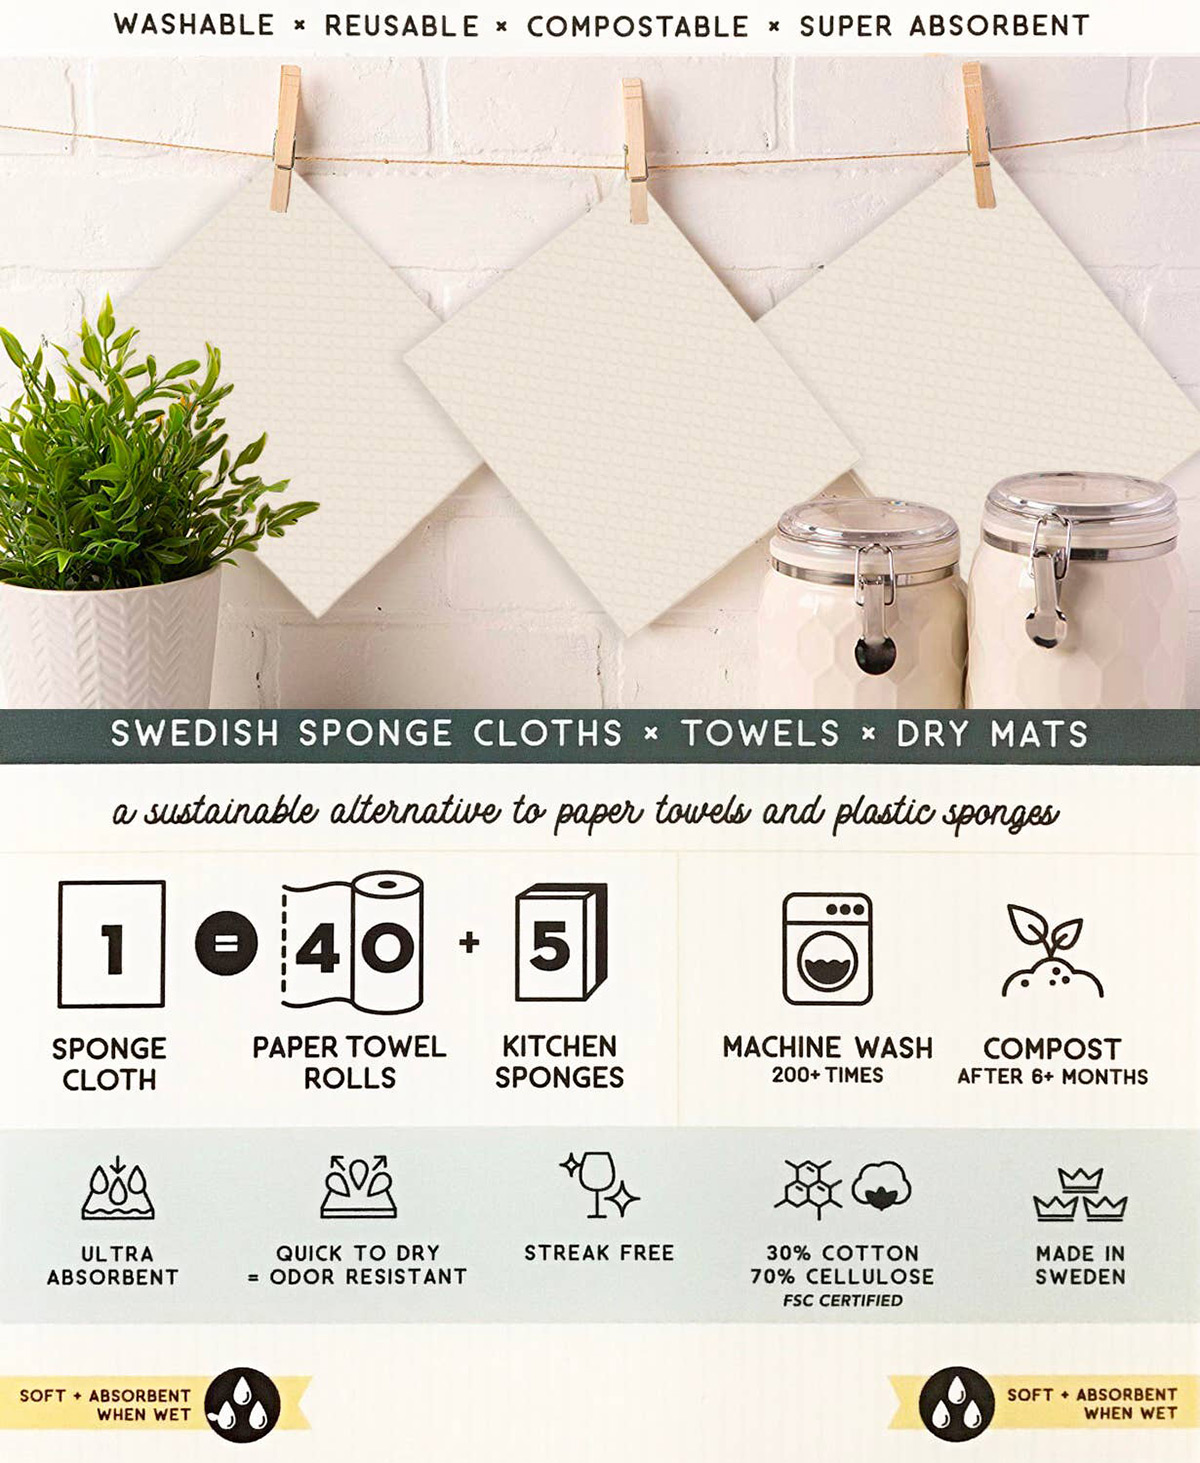 About Swedish dishcloths